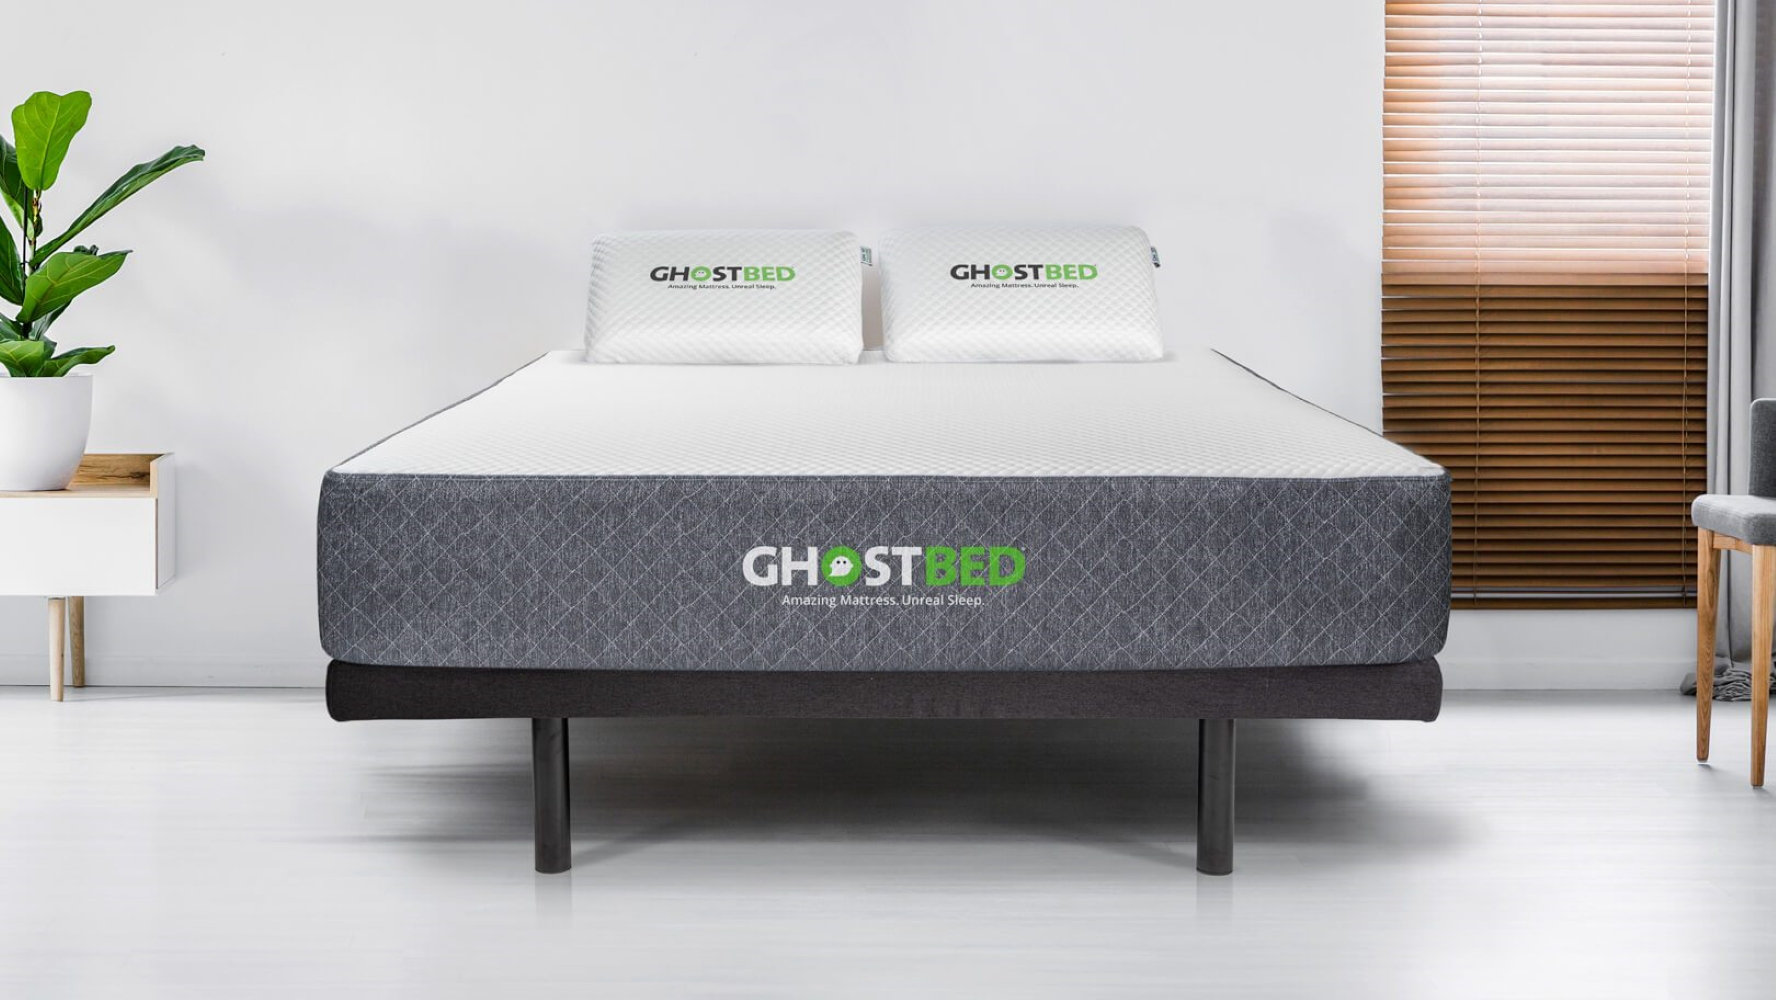 ghostbed 11 in. classic gel memory foam mattress